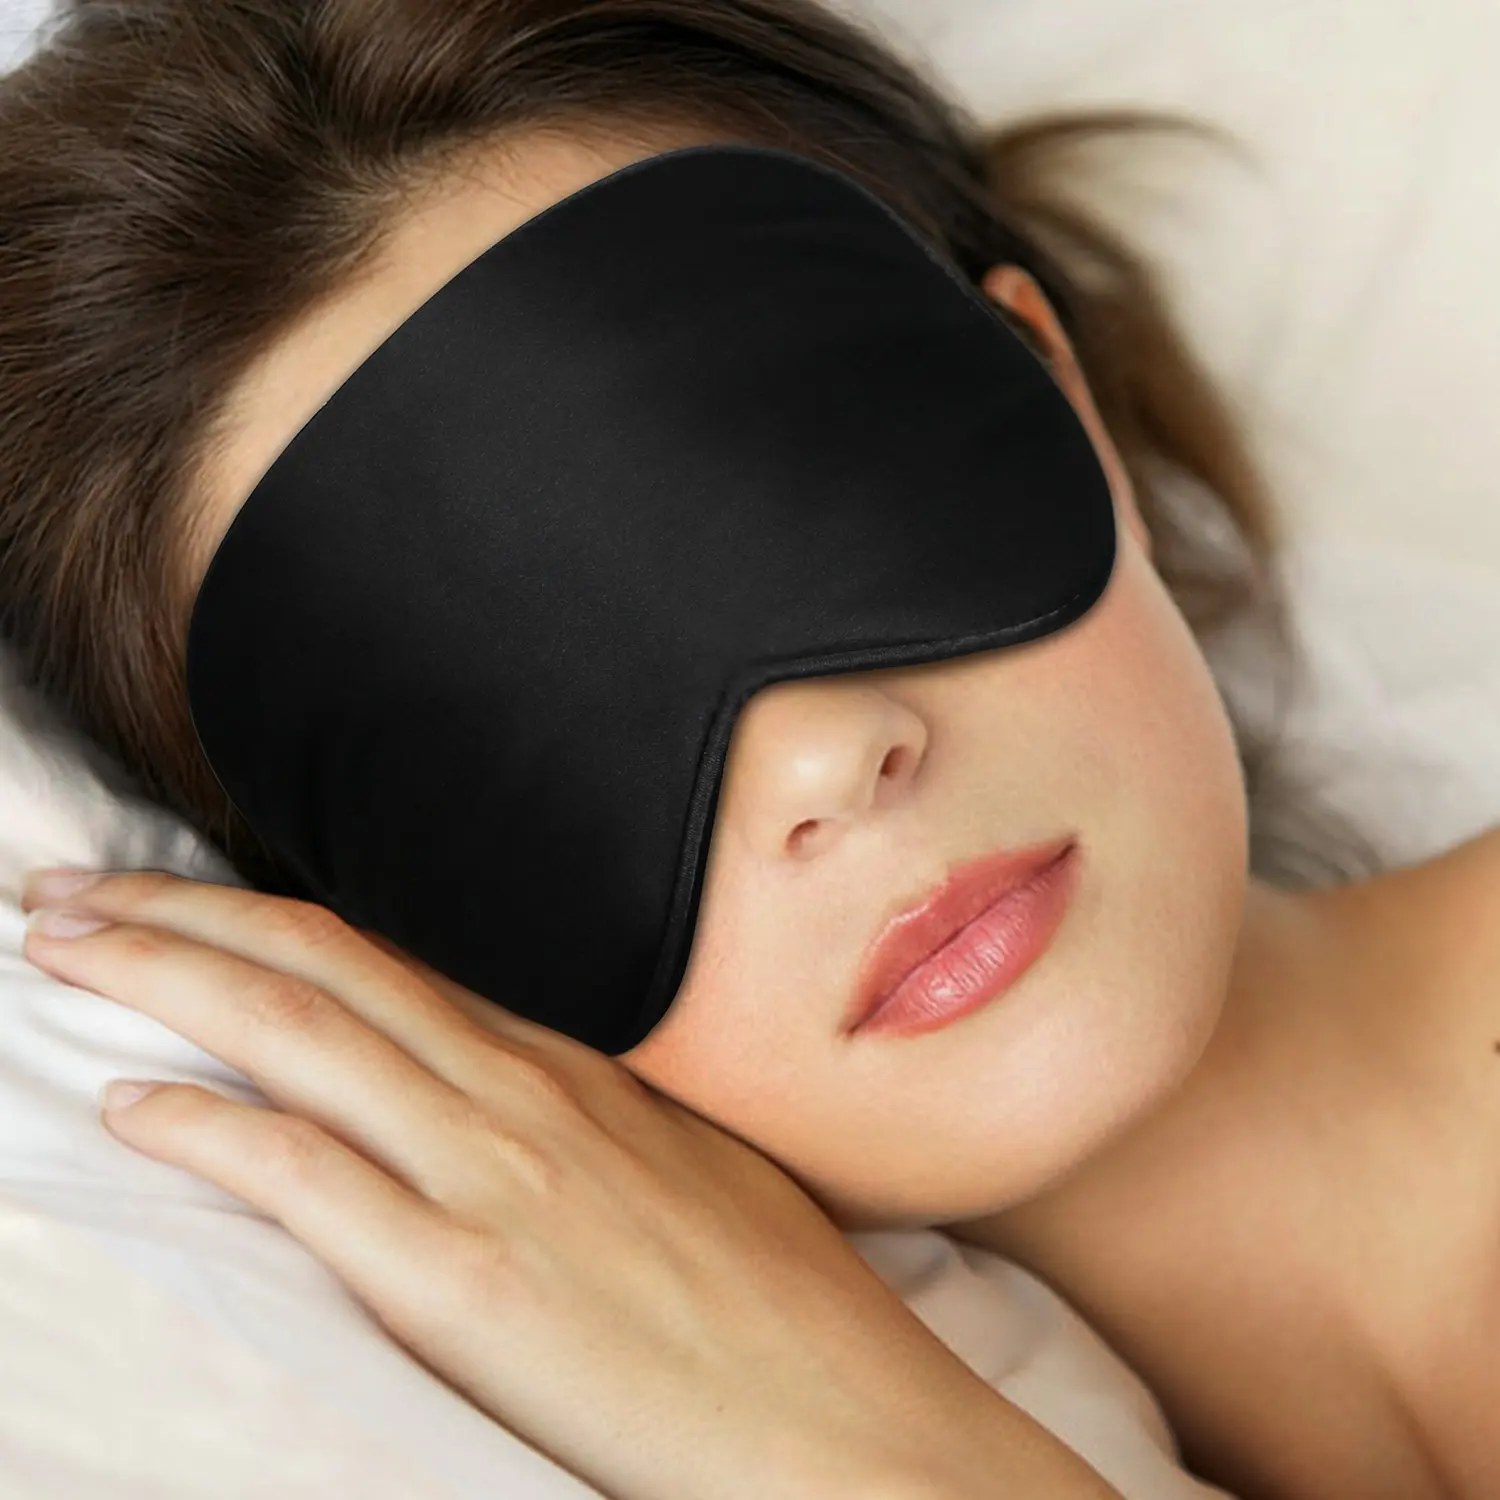 Черная маска на глаза. Маска для сна. Маска для сна "глаз". Повязка для сна. Повязка на глаза для сна.